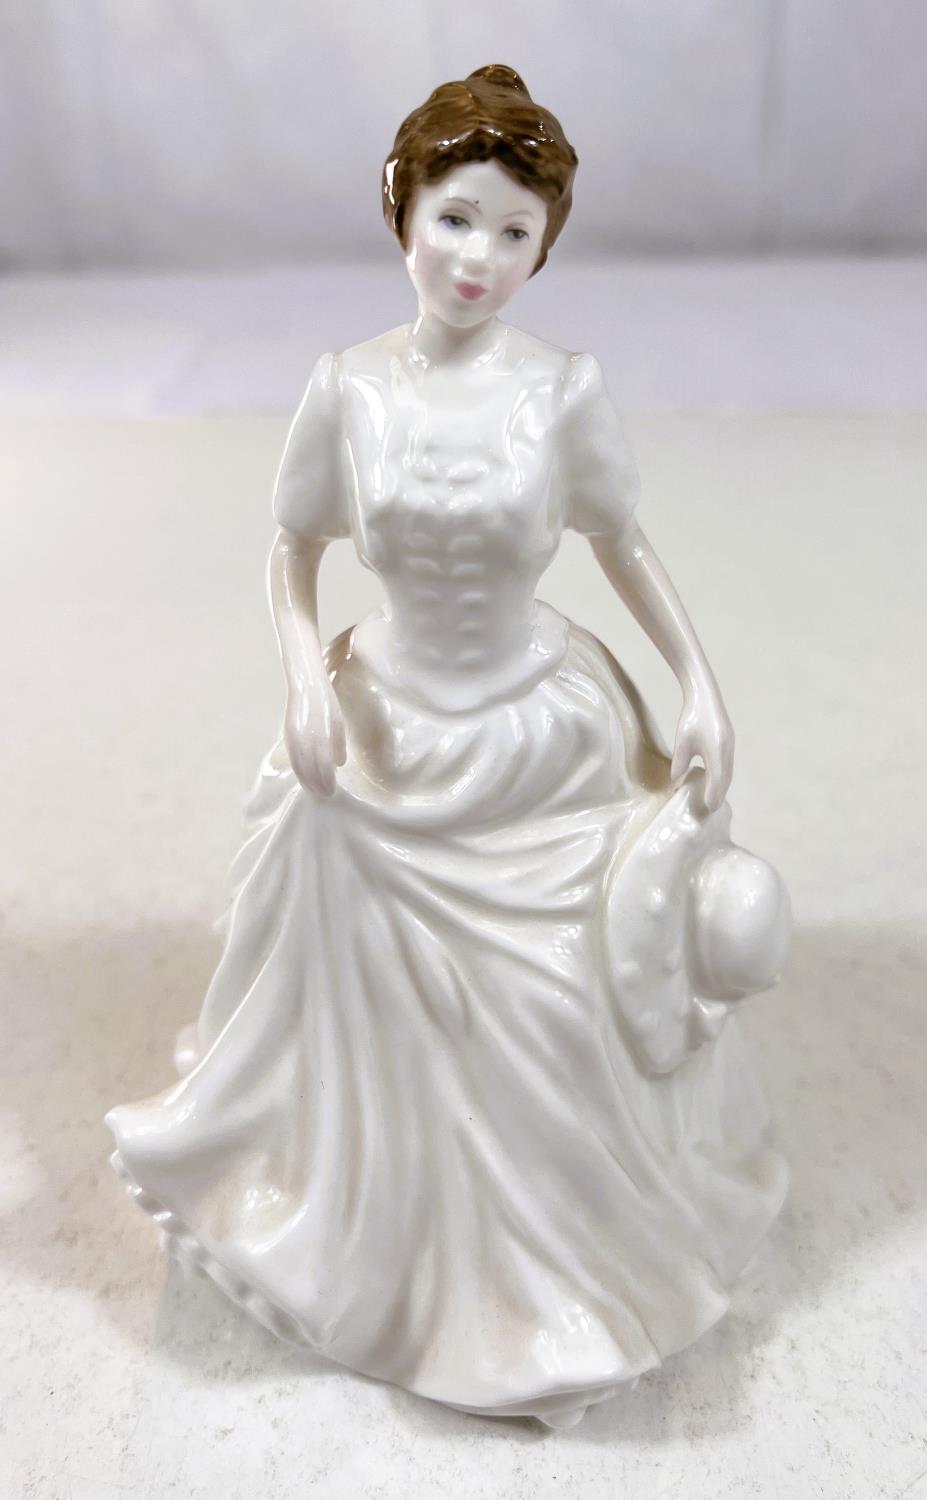 Royal Doulton: five ceramic figures Birthstones Aquamarine, Clarinda HN 2724, Collectors Club - Image 2 of 2